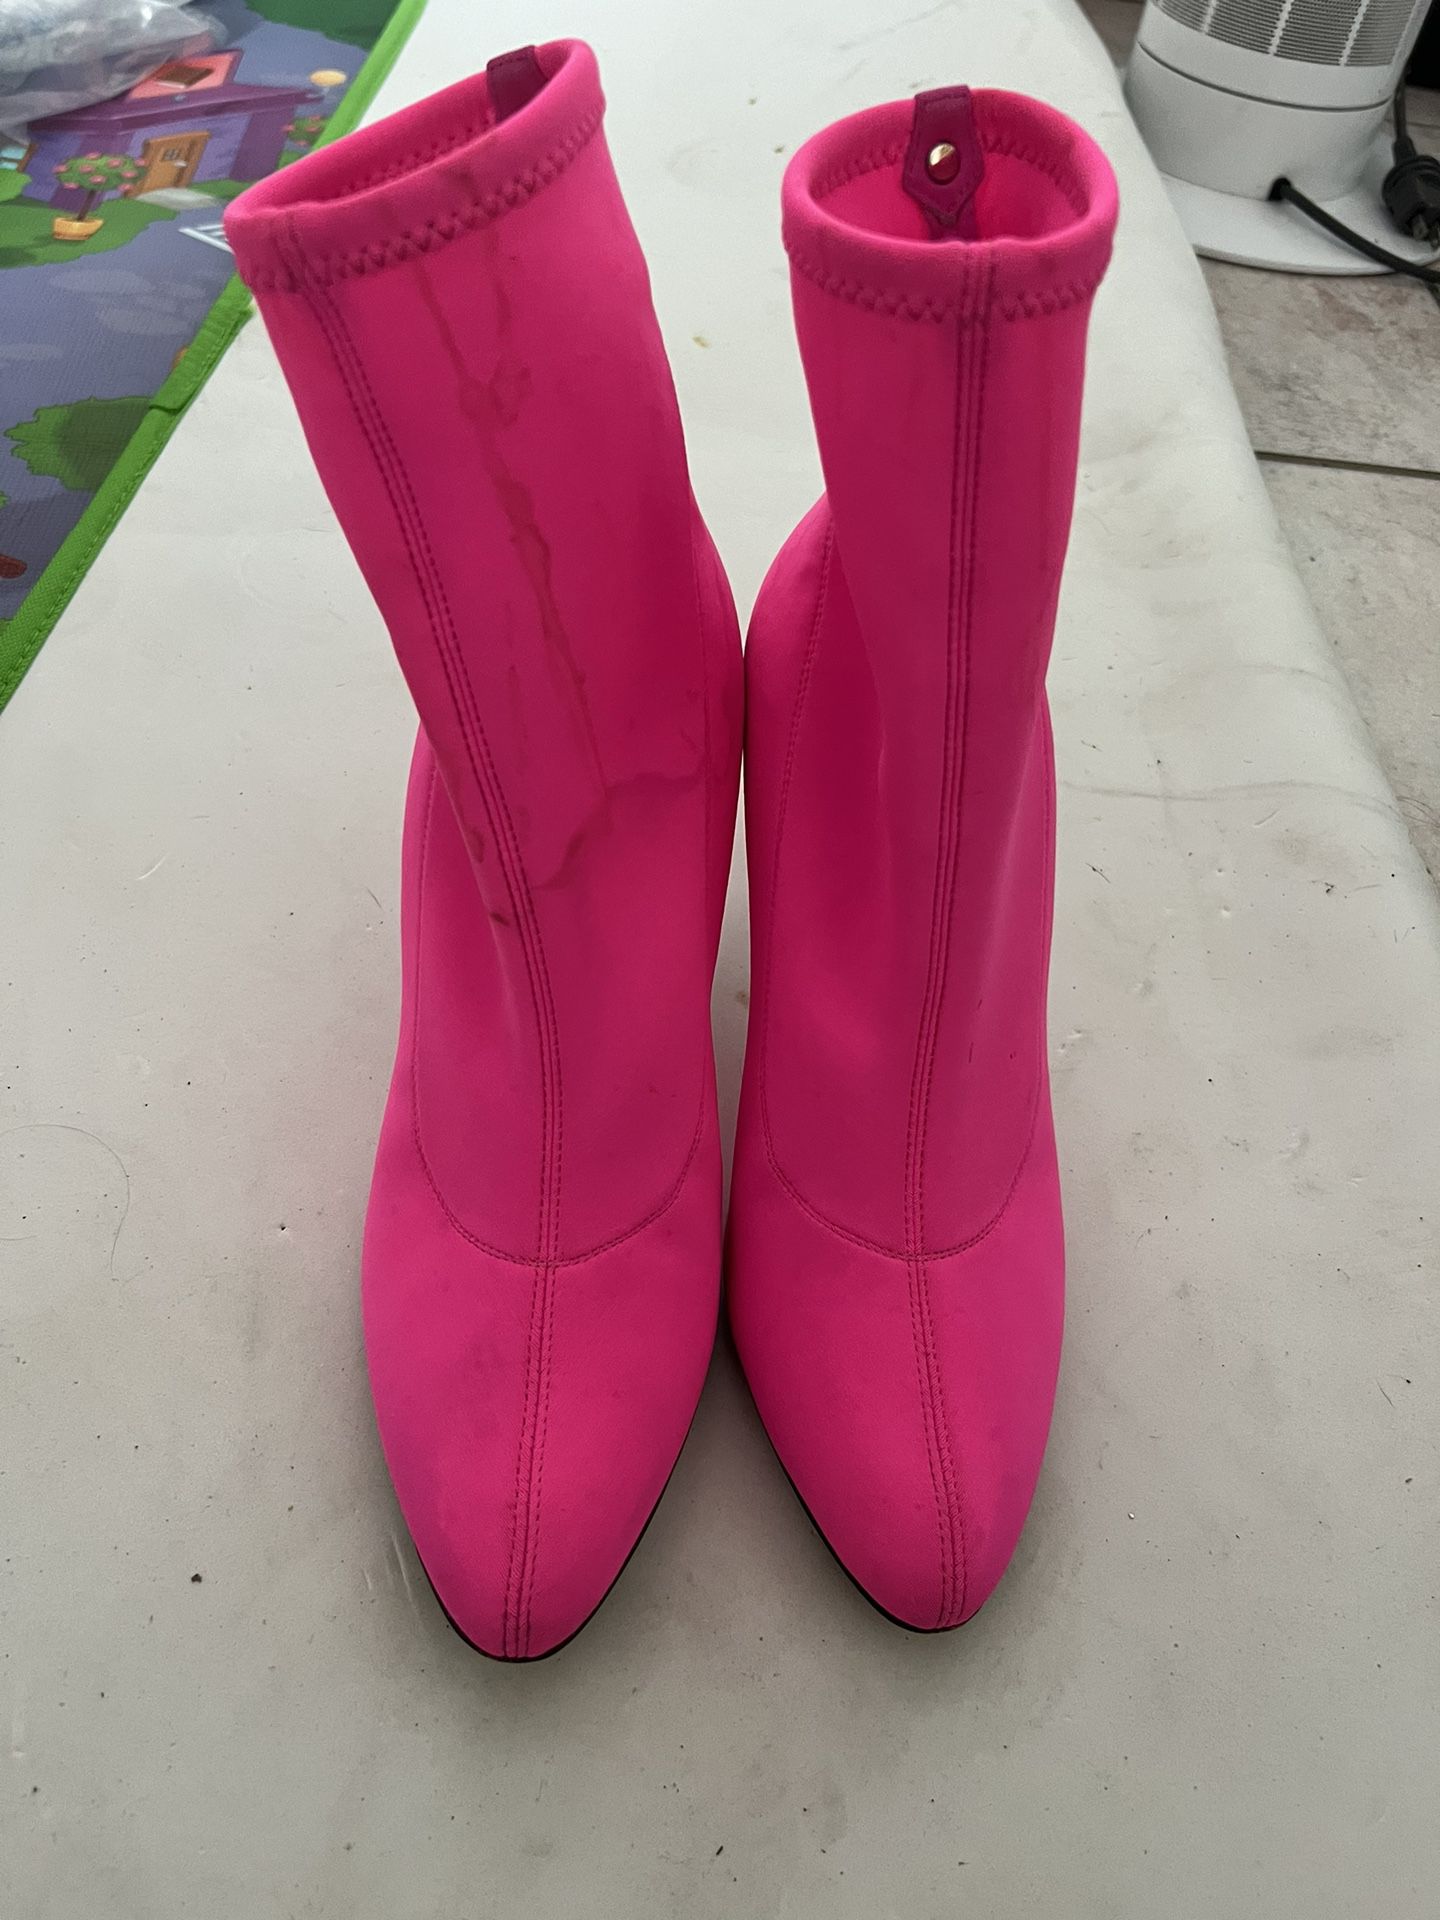  Giuseppe Zanotti hot pink booties sock boots Barbie pink heels calf high shoes